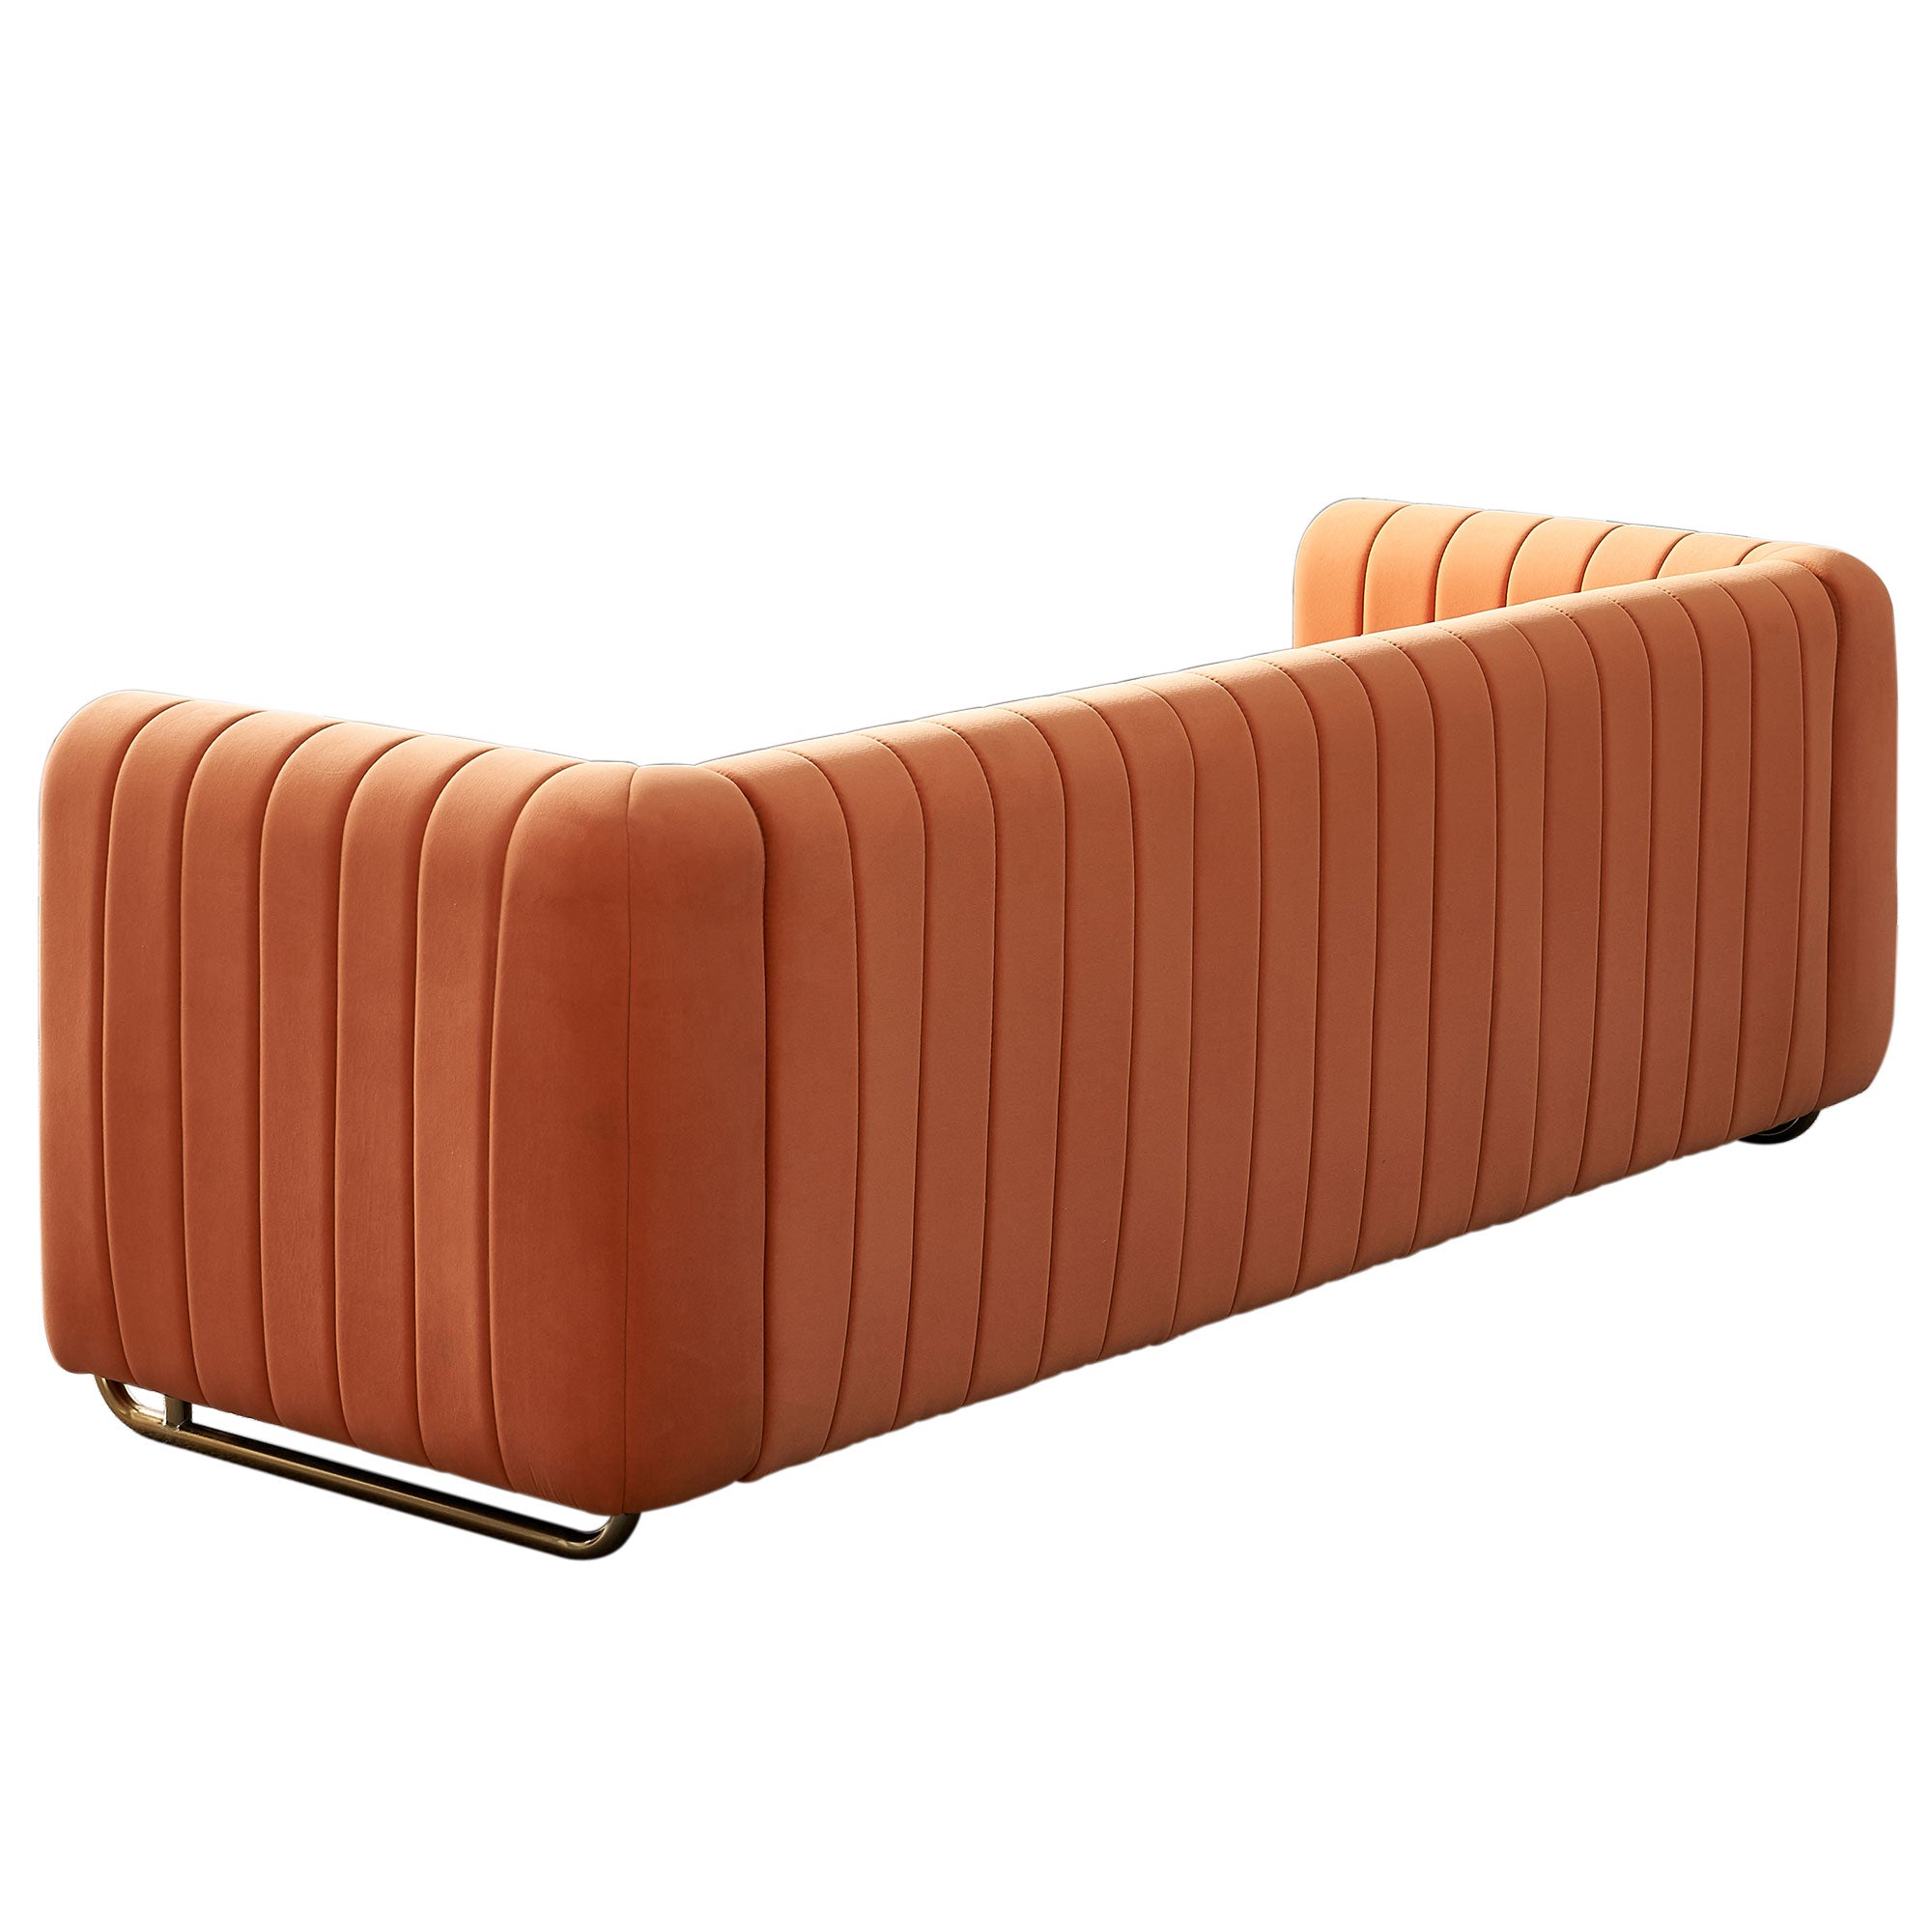 ZNTS Modern velvet sofa orange color W57946170